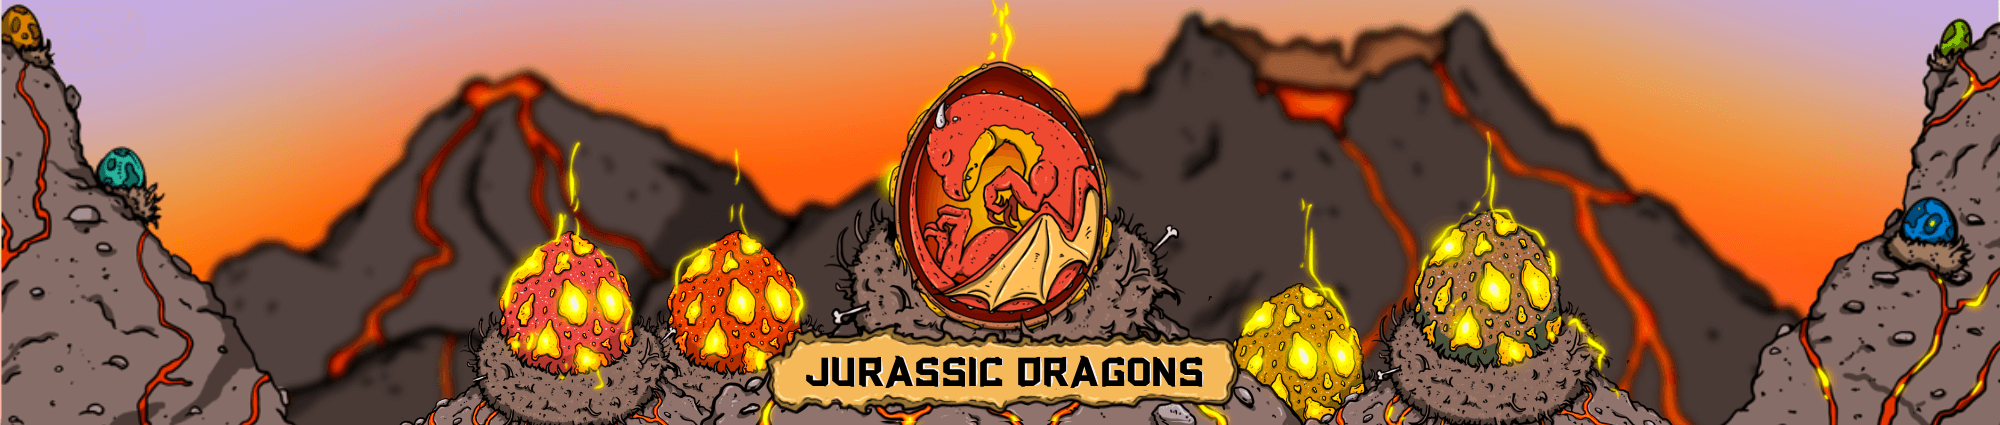 Jurassic Eggs: Dragons